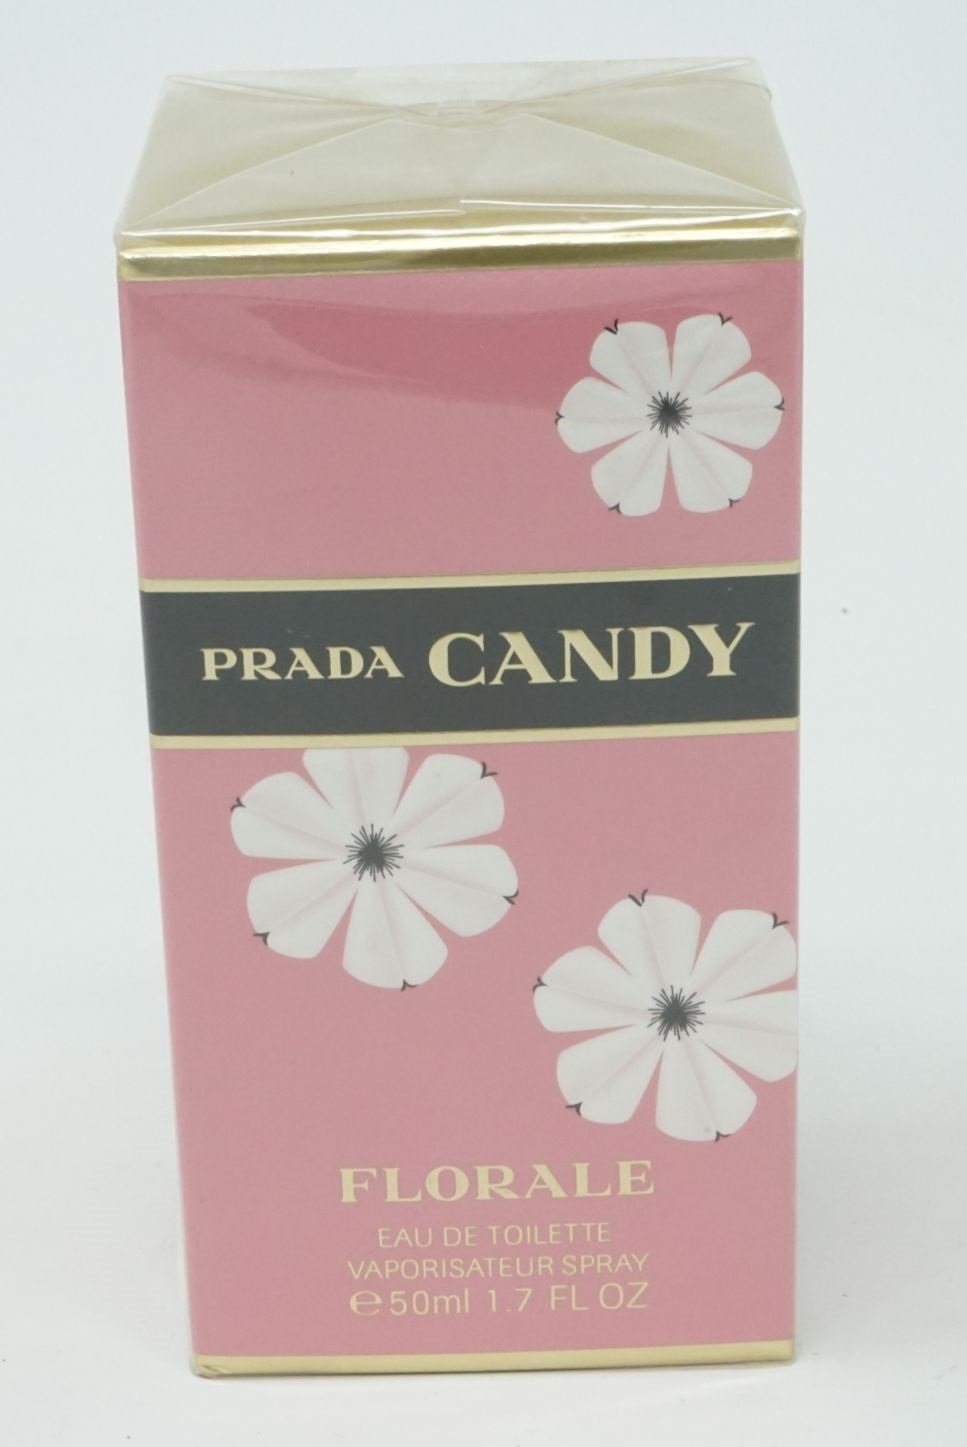 Eau Prada ml de Toilette Spray 50 de Florale Toilette PRADA Candy Eau